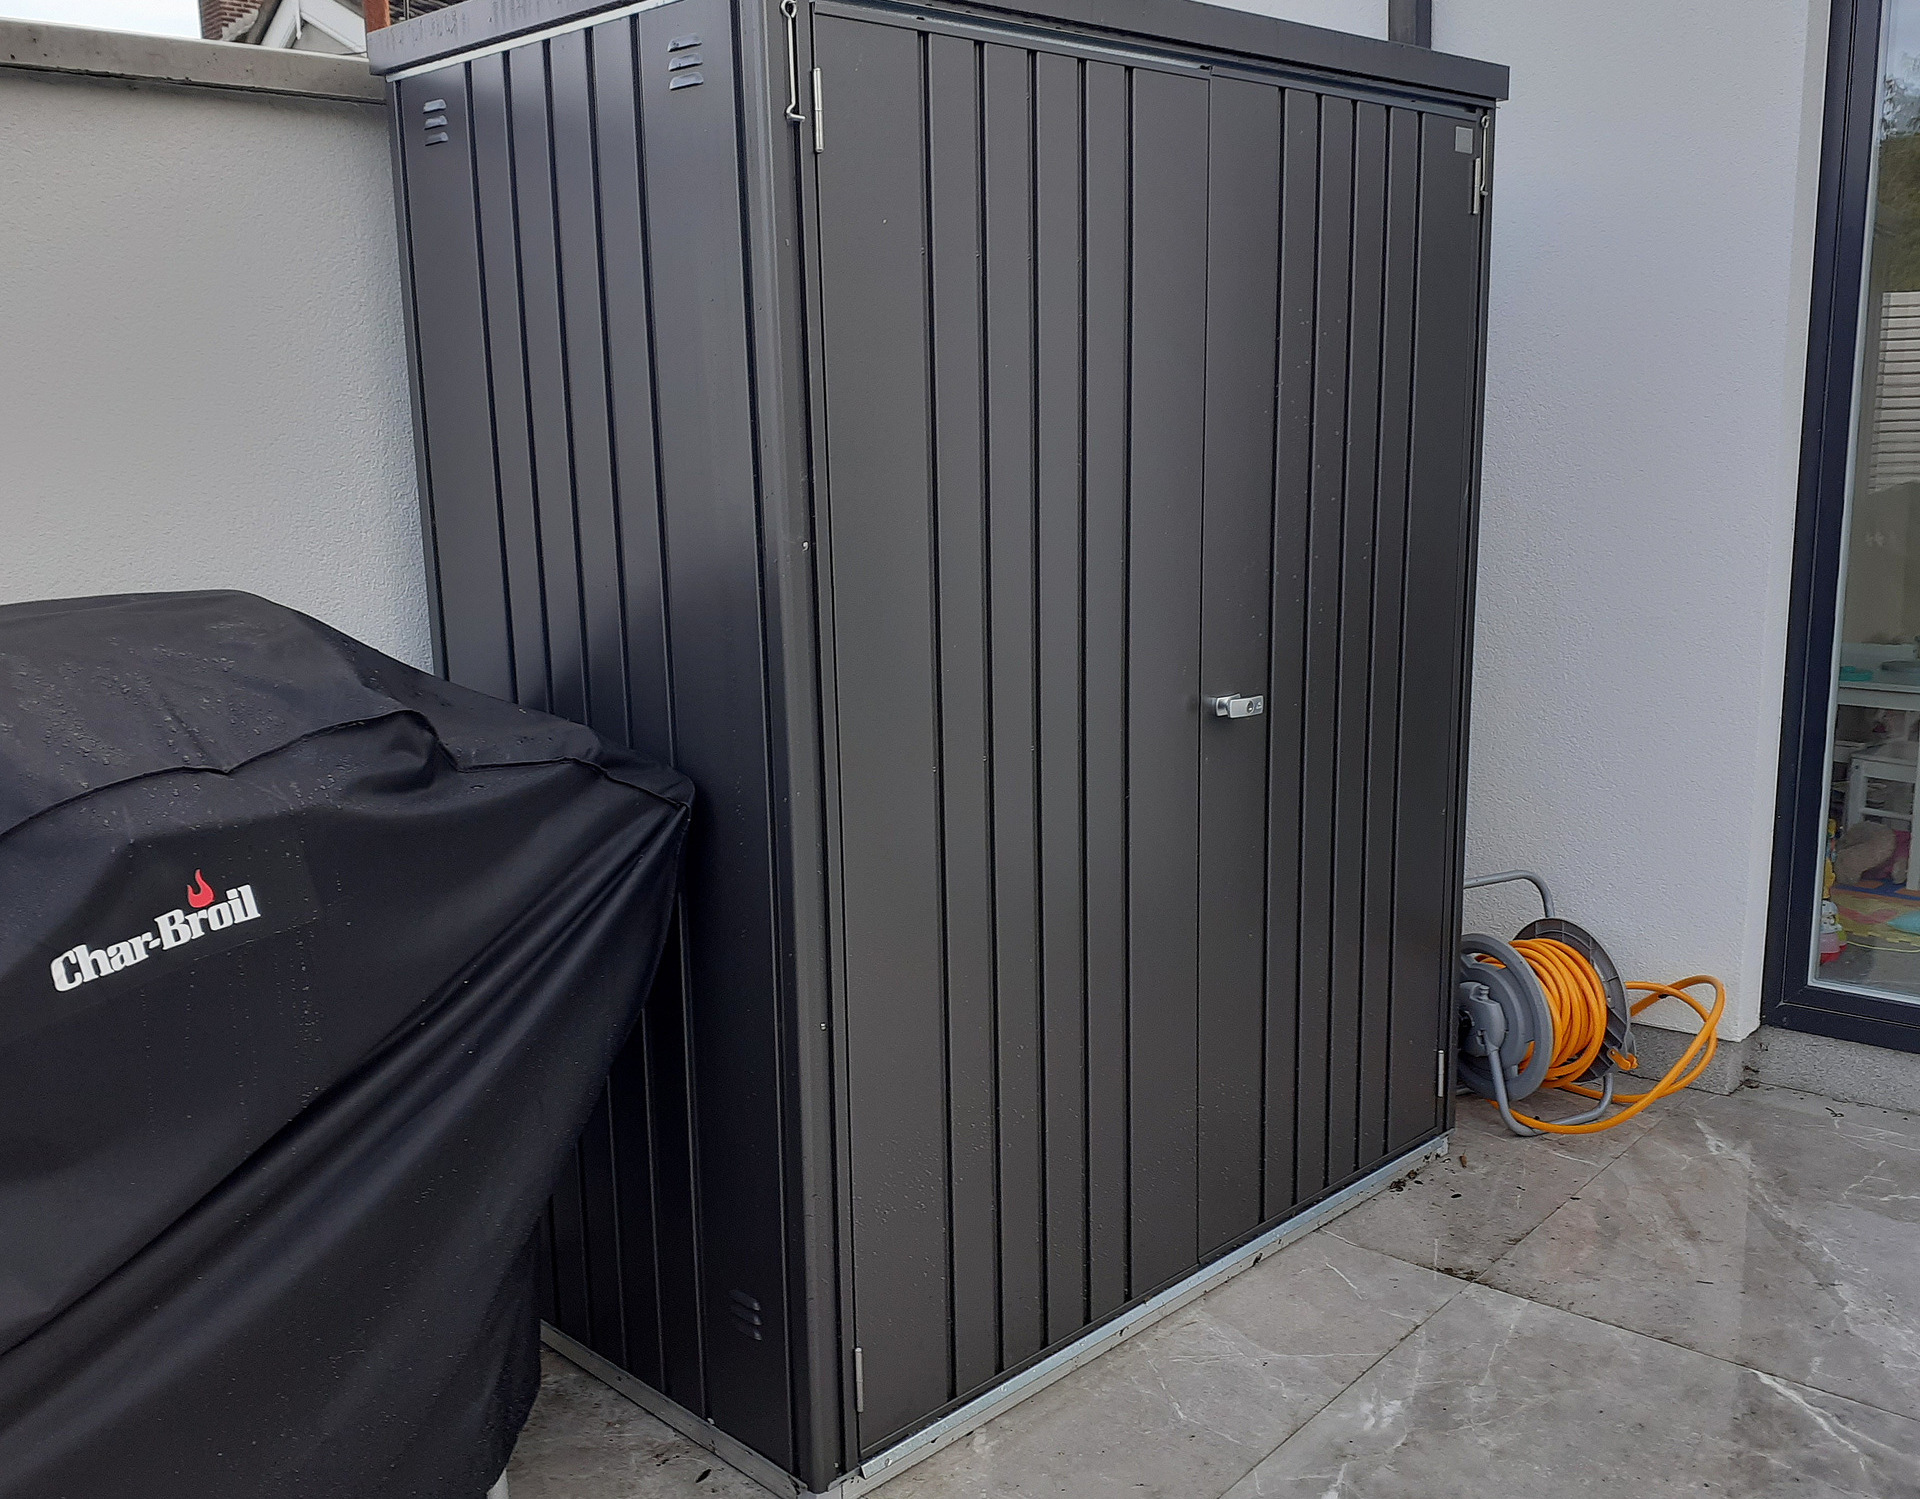 Biohort Equipment Locker 150 in metallic dark grey, supplied + fitted in Goatstown, Dublin 18 | Stylish, Versatile, Secure & Rainproof Patio Storage Solutions | FREE Fitting